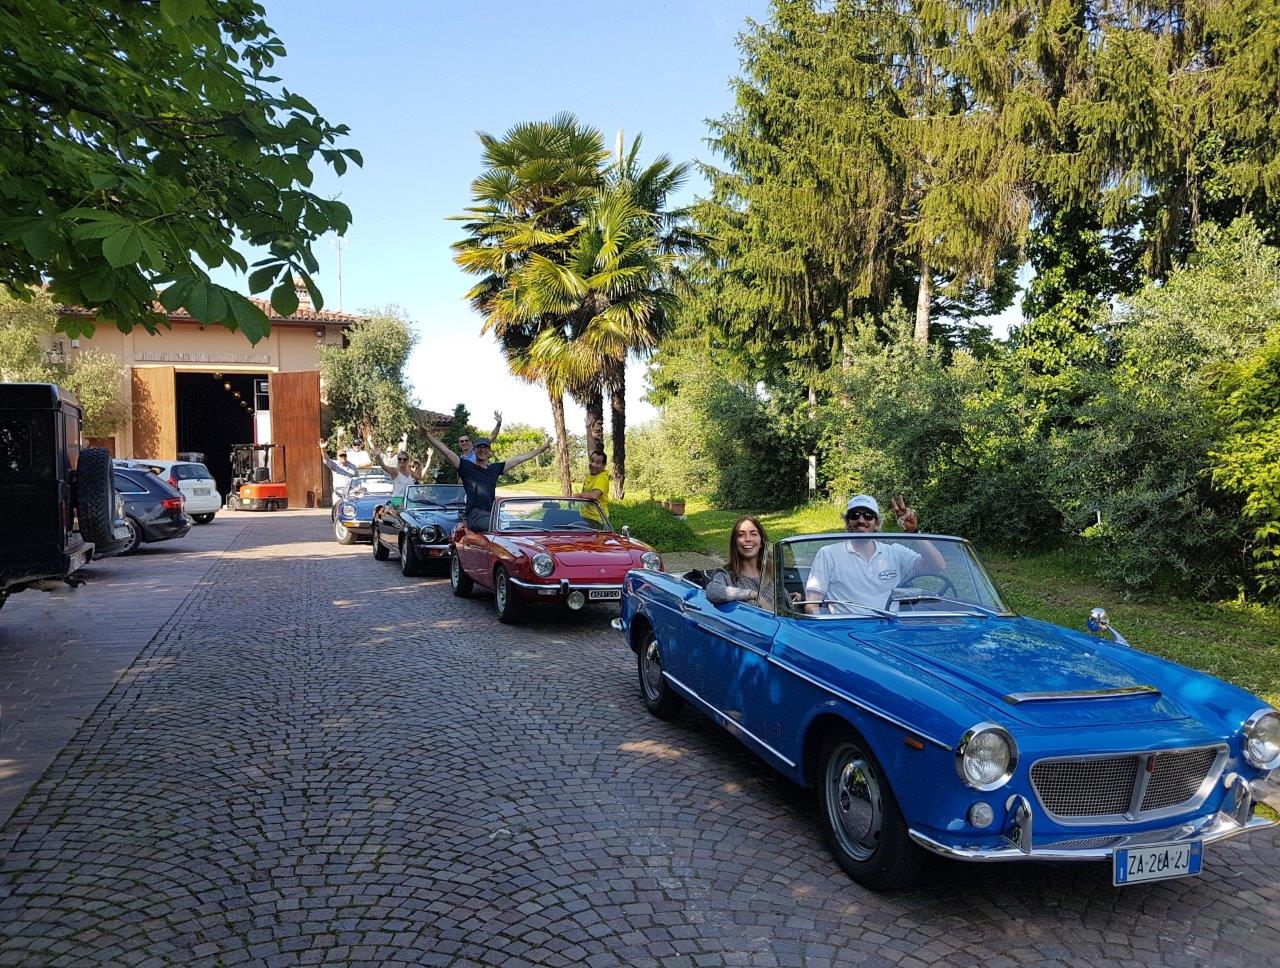 2-Pollenzo_Driving-Vintage-Tour-accompagnati_guided-tour_tour_vintage-car_auto-depoca_driving-vintage_turismo_leisure_langhe_Turin_Torino_noleggio-auto_car-rental.jpg